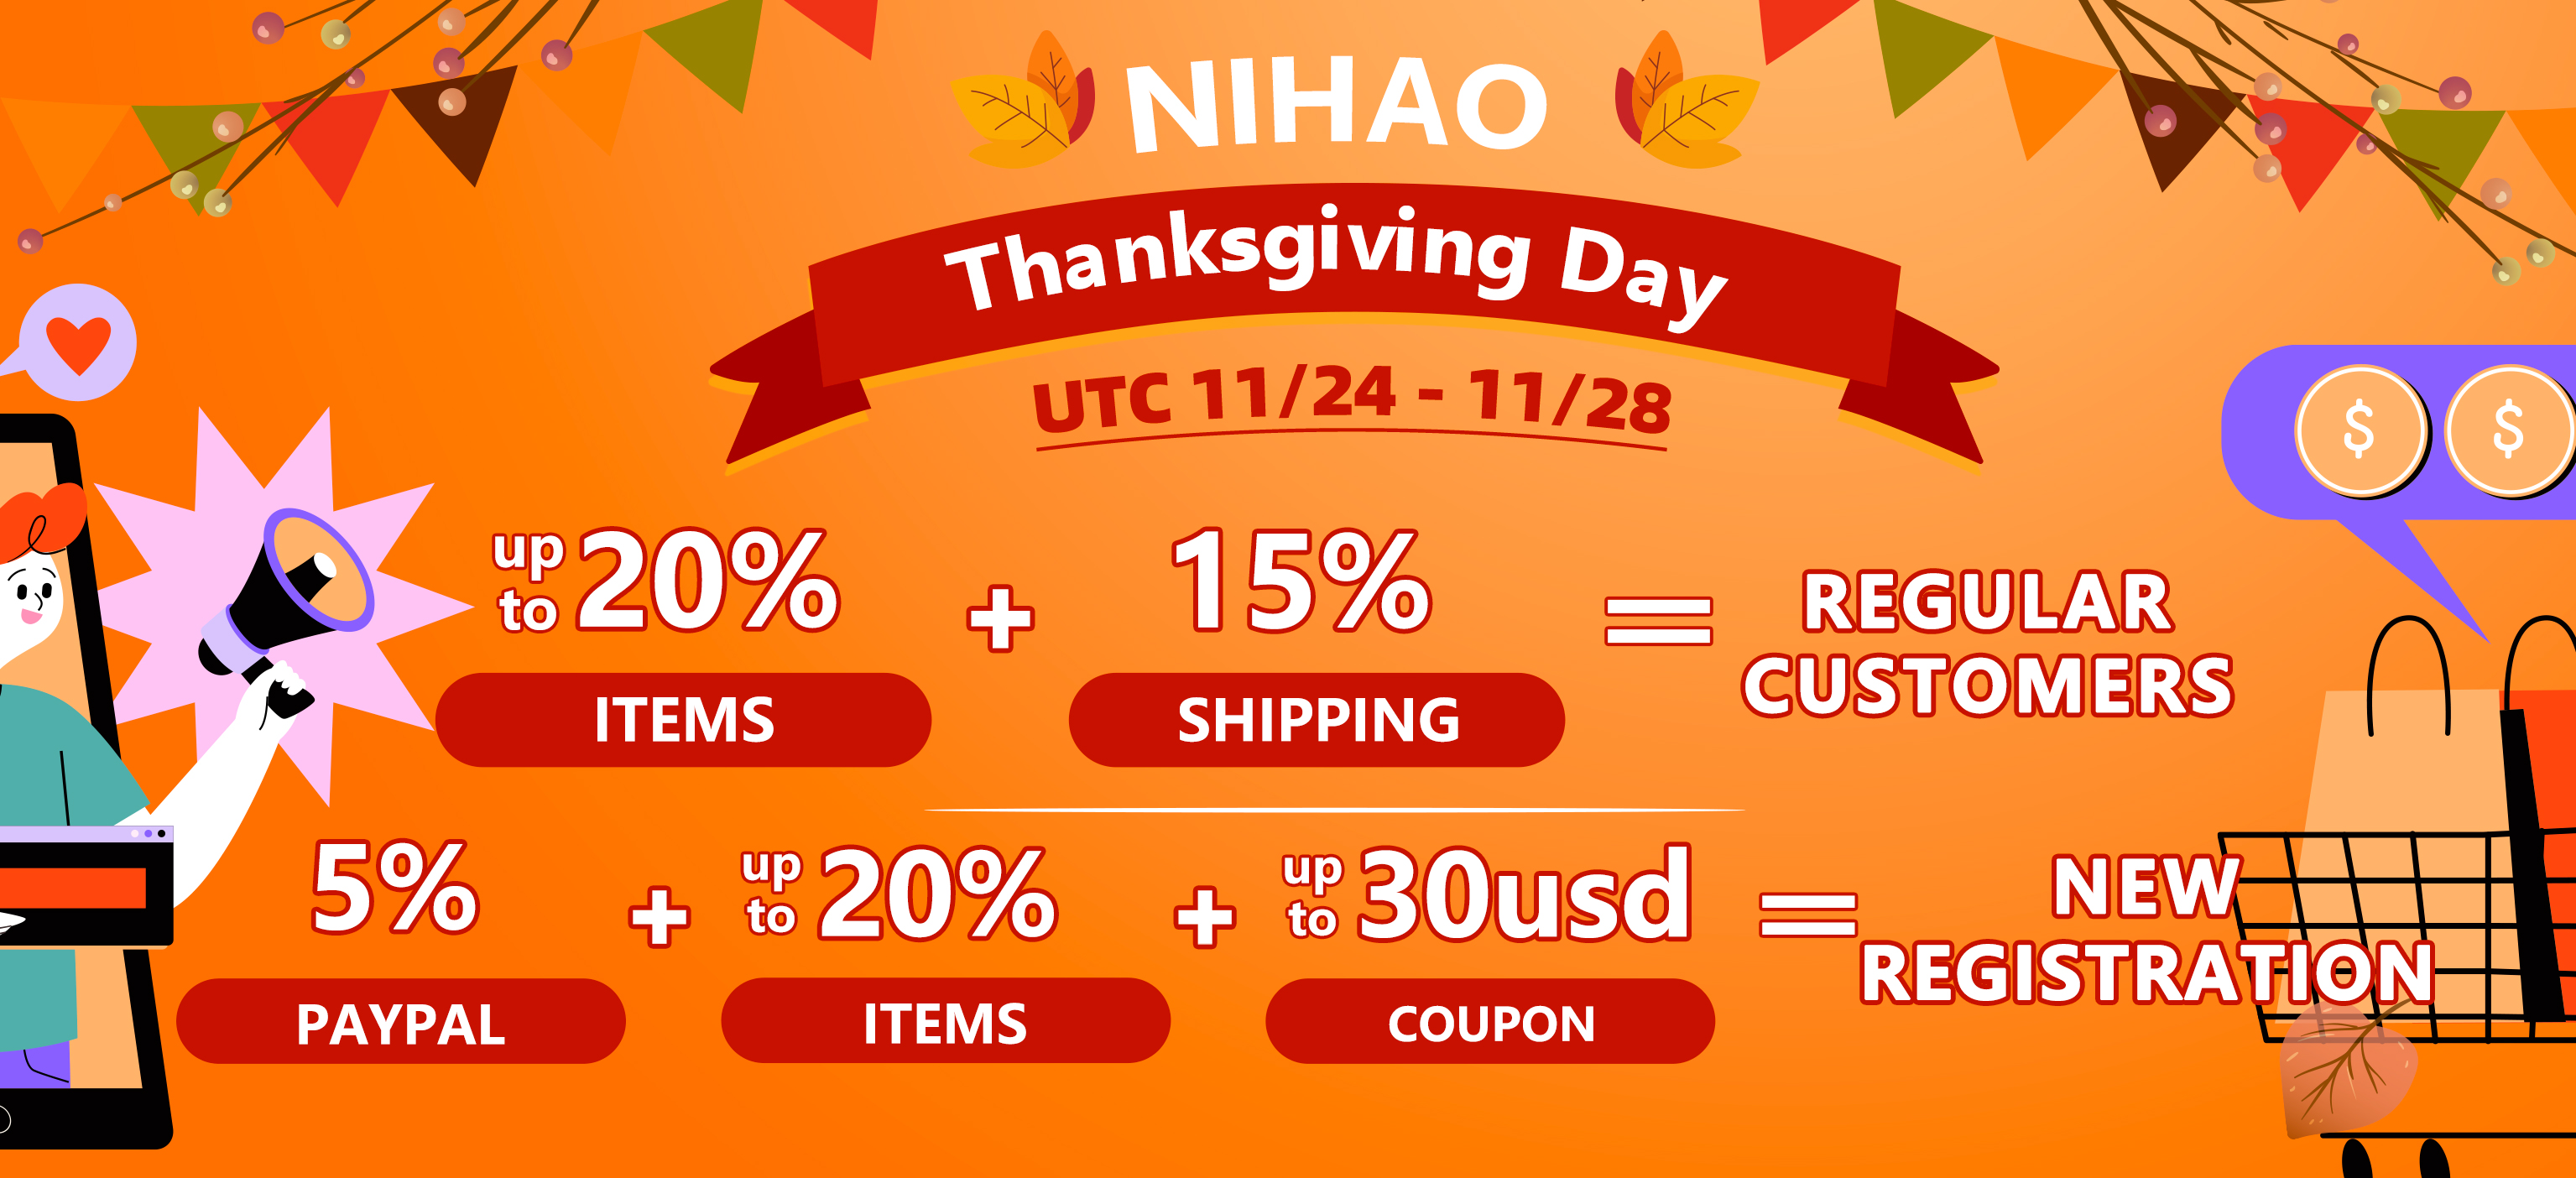 Nihao thanksgiving discount